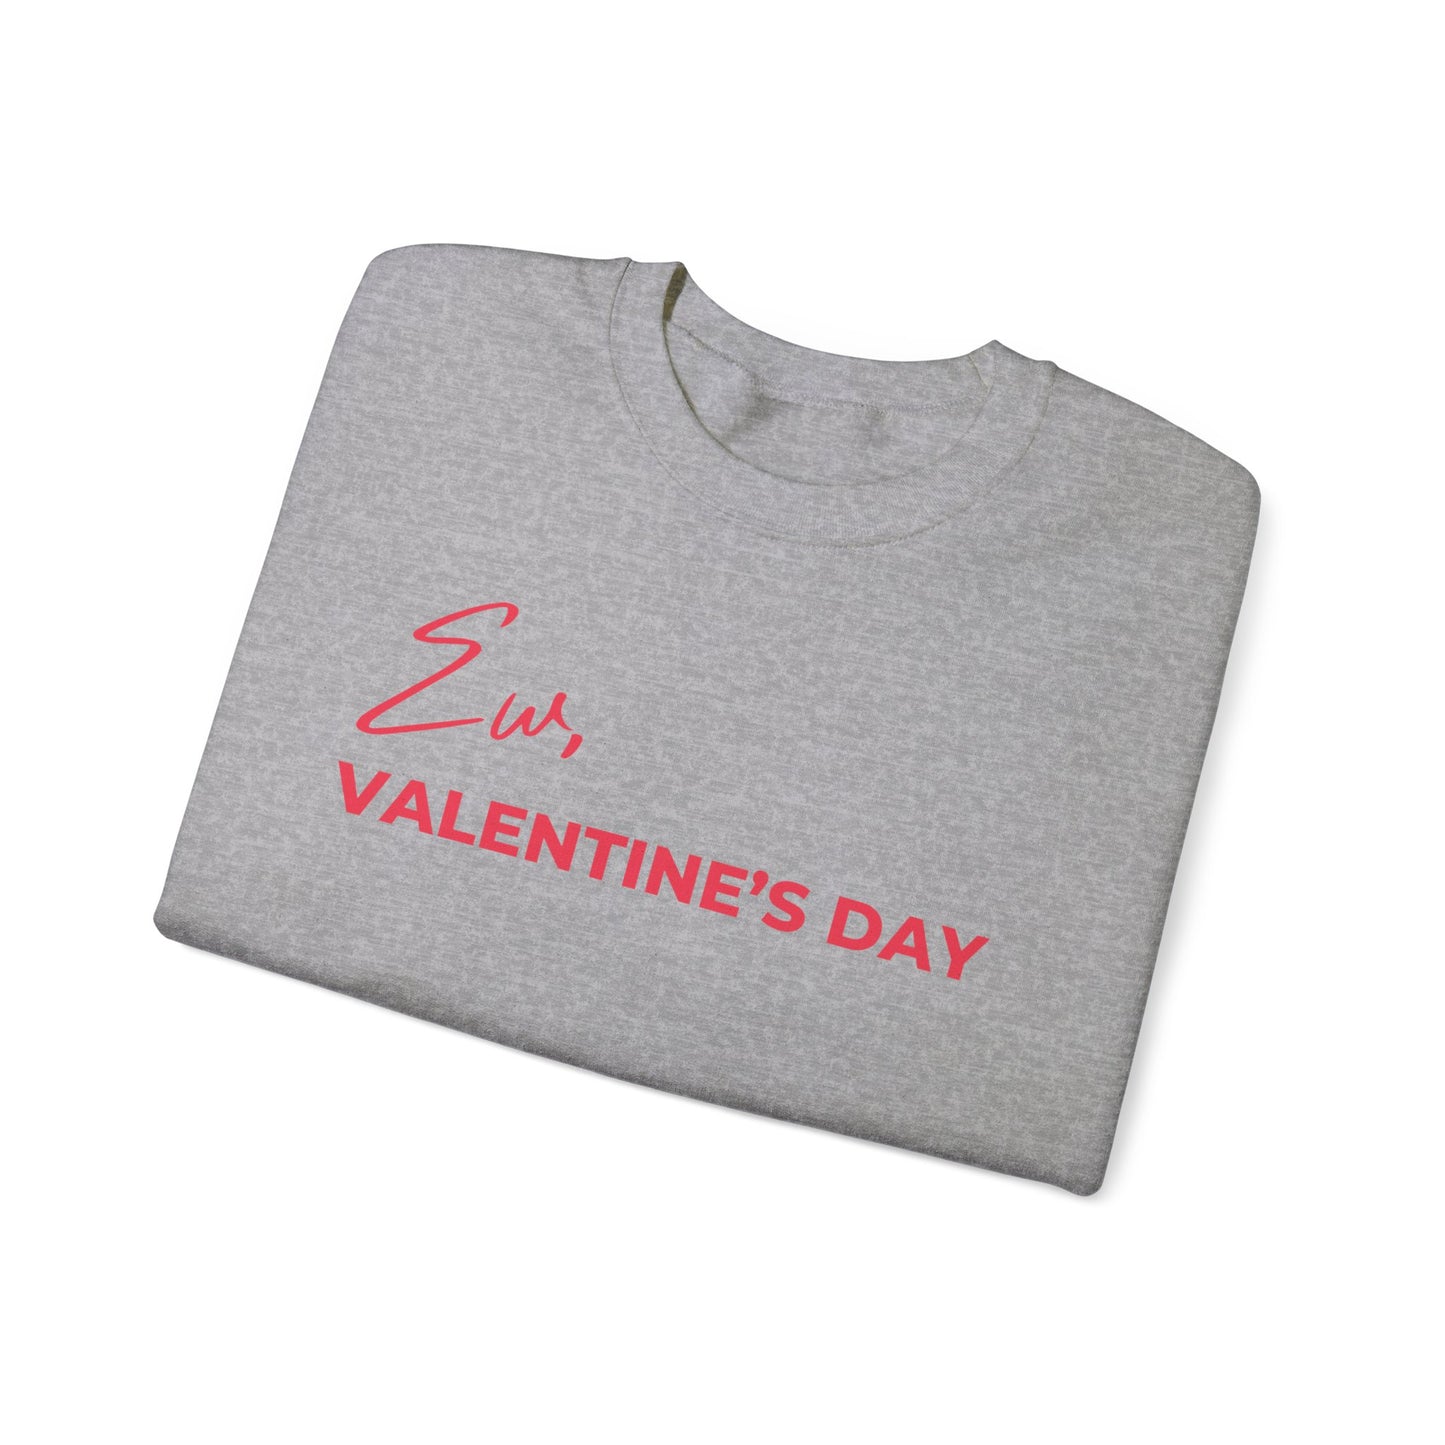 Ew Valentines Day Sweatshirt, Funny Valentines Day Sweater, Gift for bestie, Anti Valentines Day, Premium Crewneck